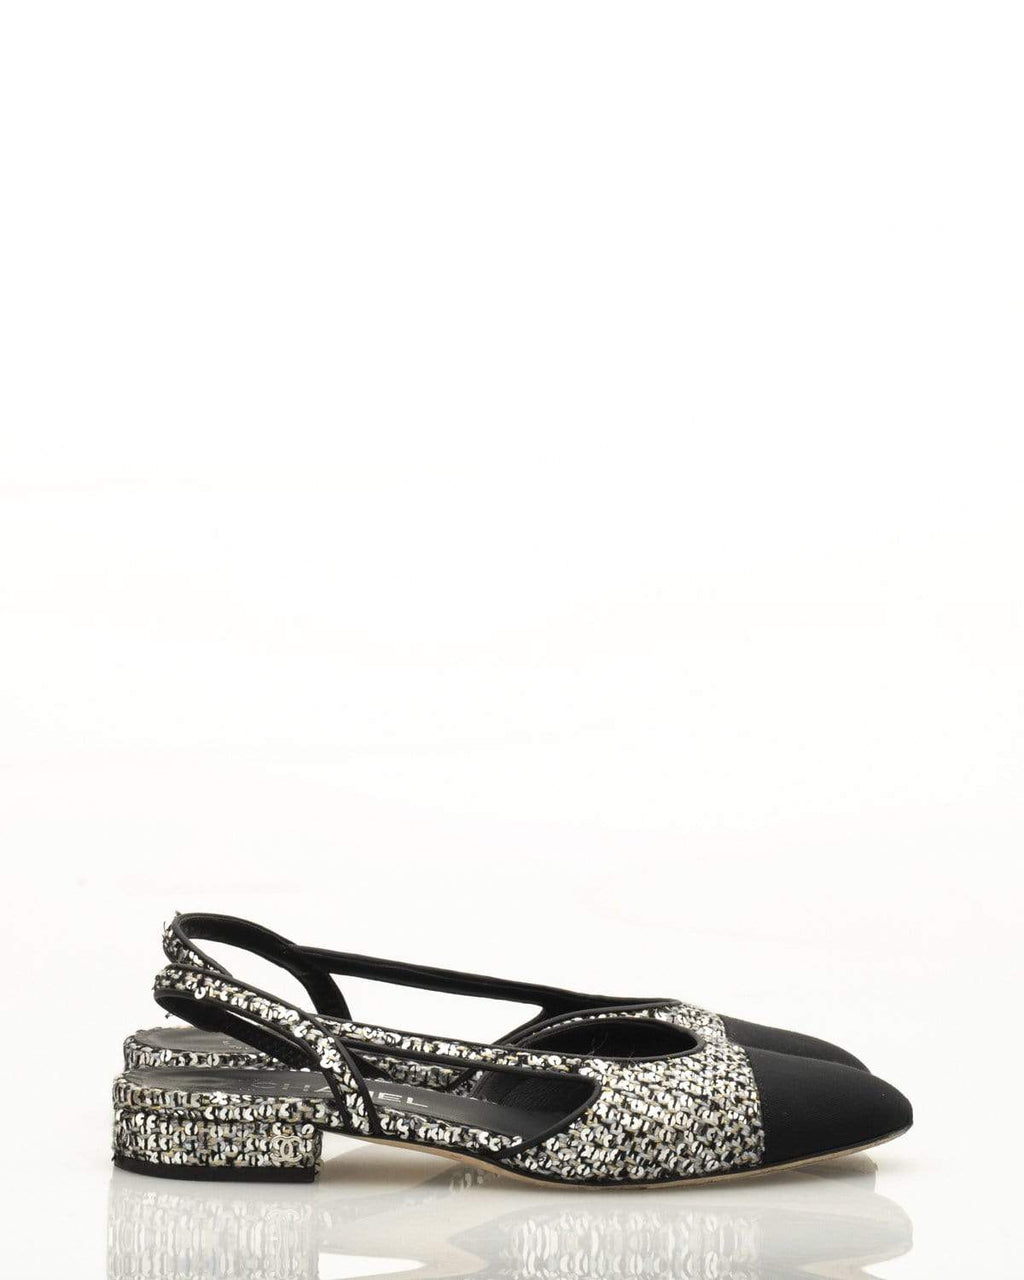 Chanel Tweed & Sequin Grosgrain Sling Back Shoes size 37.5 - AWC1063 –  LuxuryPromise